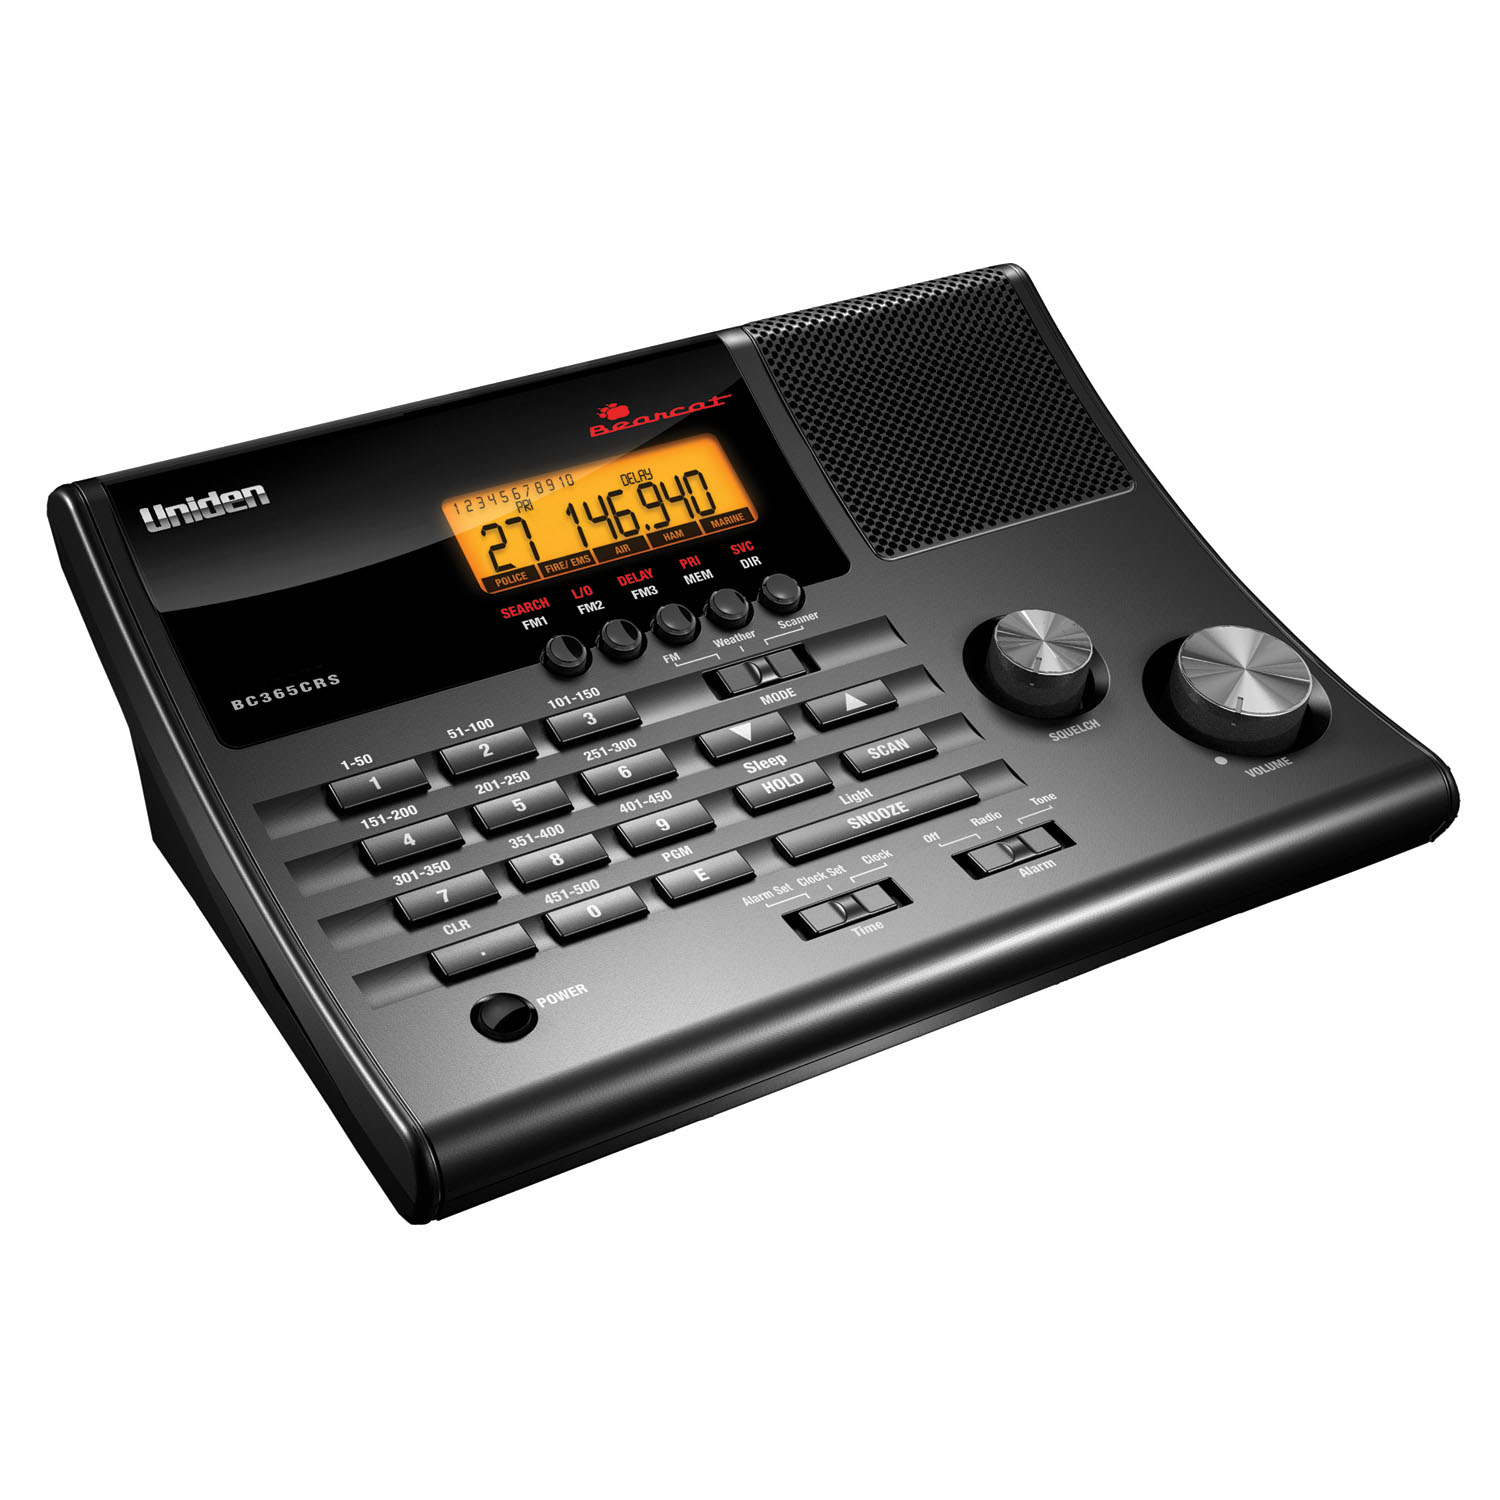 Uniden - 500 Channel Desktop Scanner With Built-In Fm Radio, Alarm Clock, Noaa Weather With Scan & Alert, Pre-Programmed Service